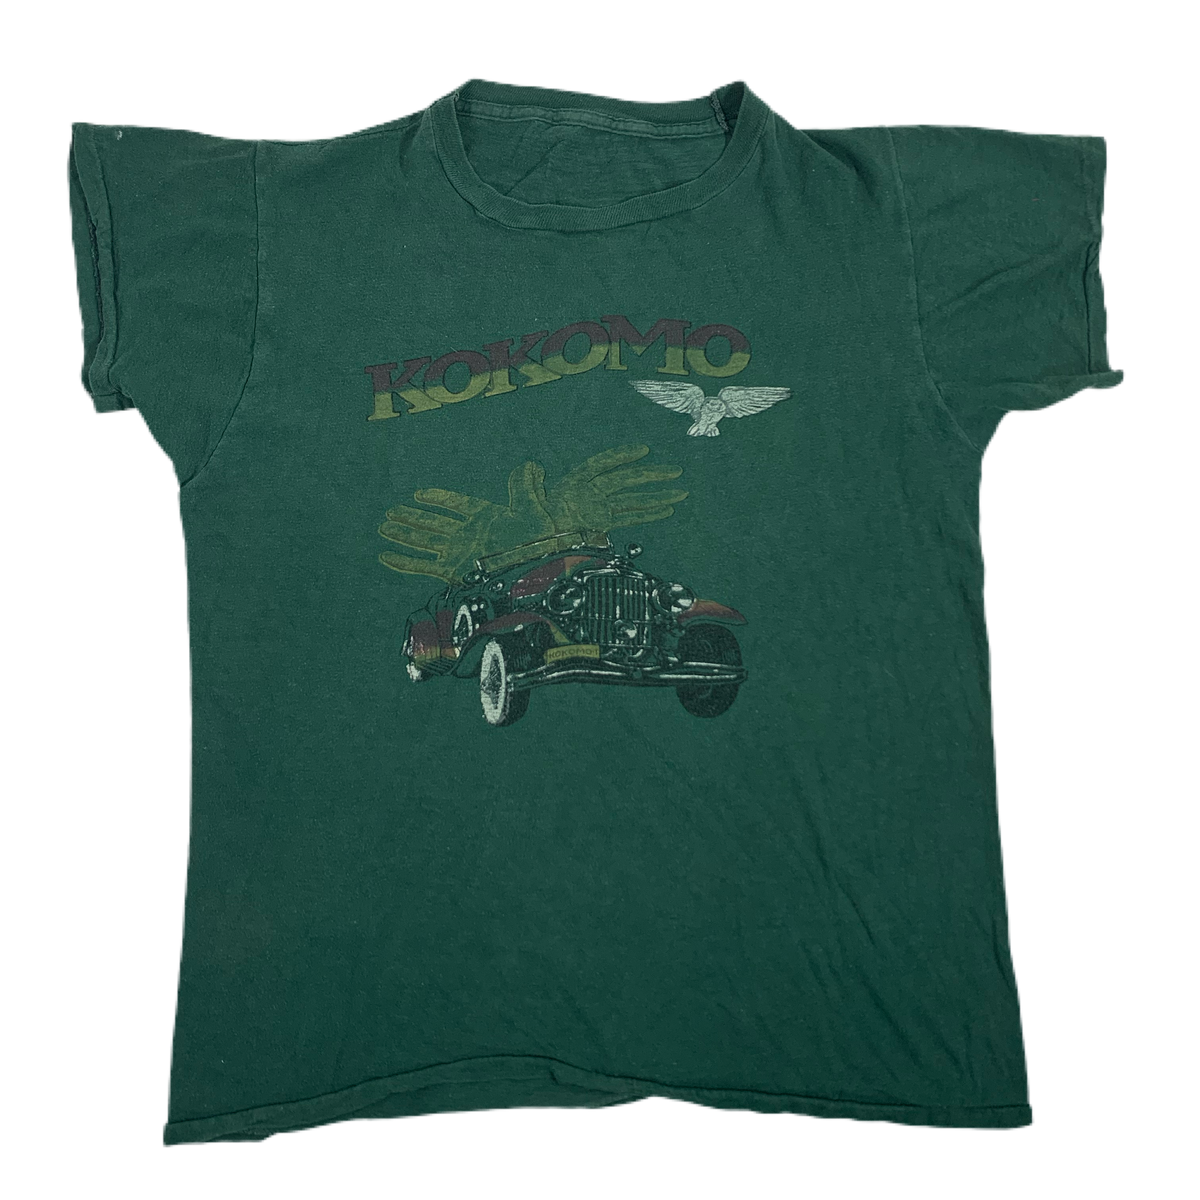 Vintage Kokomo “Self-Titled” T-Shirt - jointcustodydc